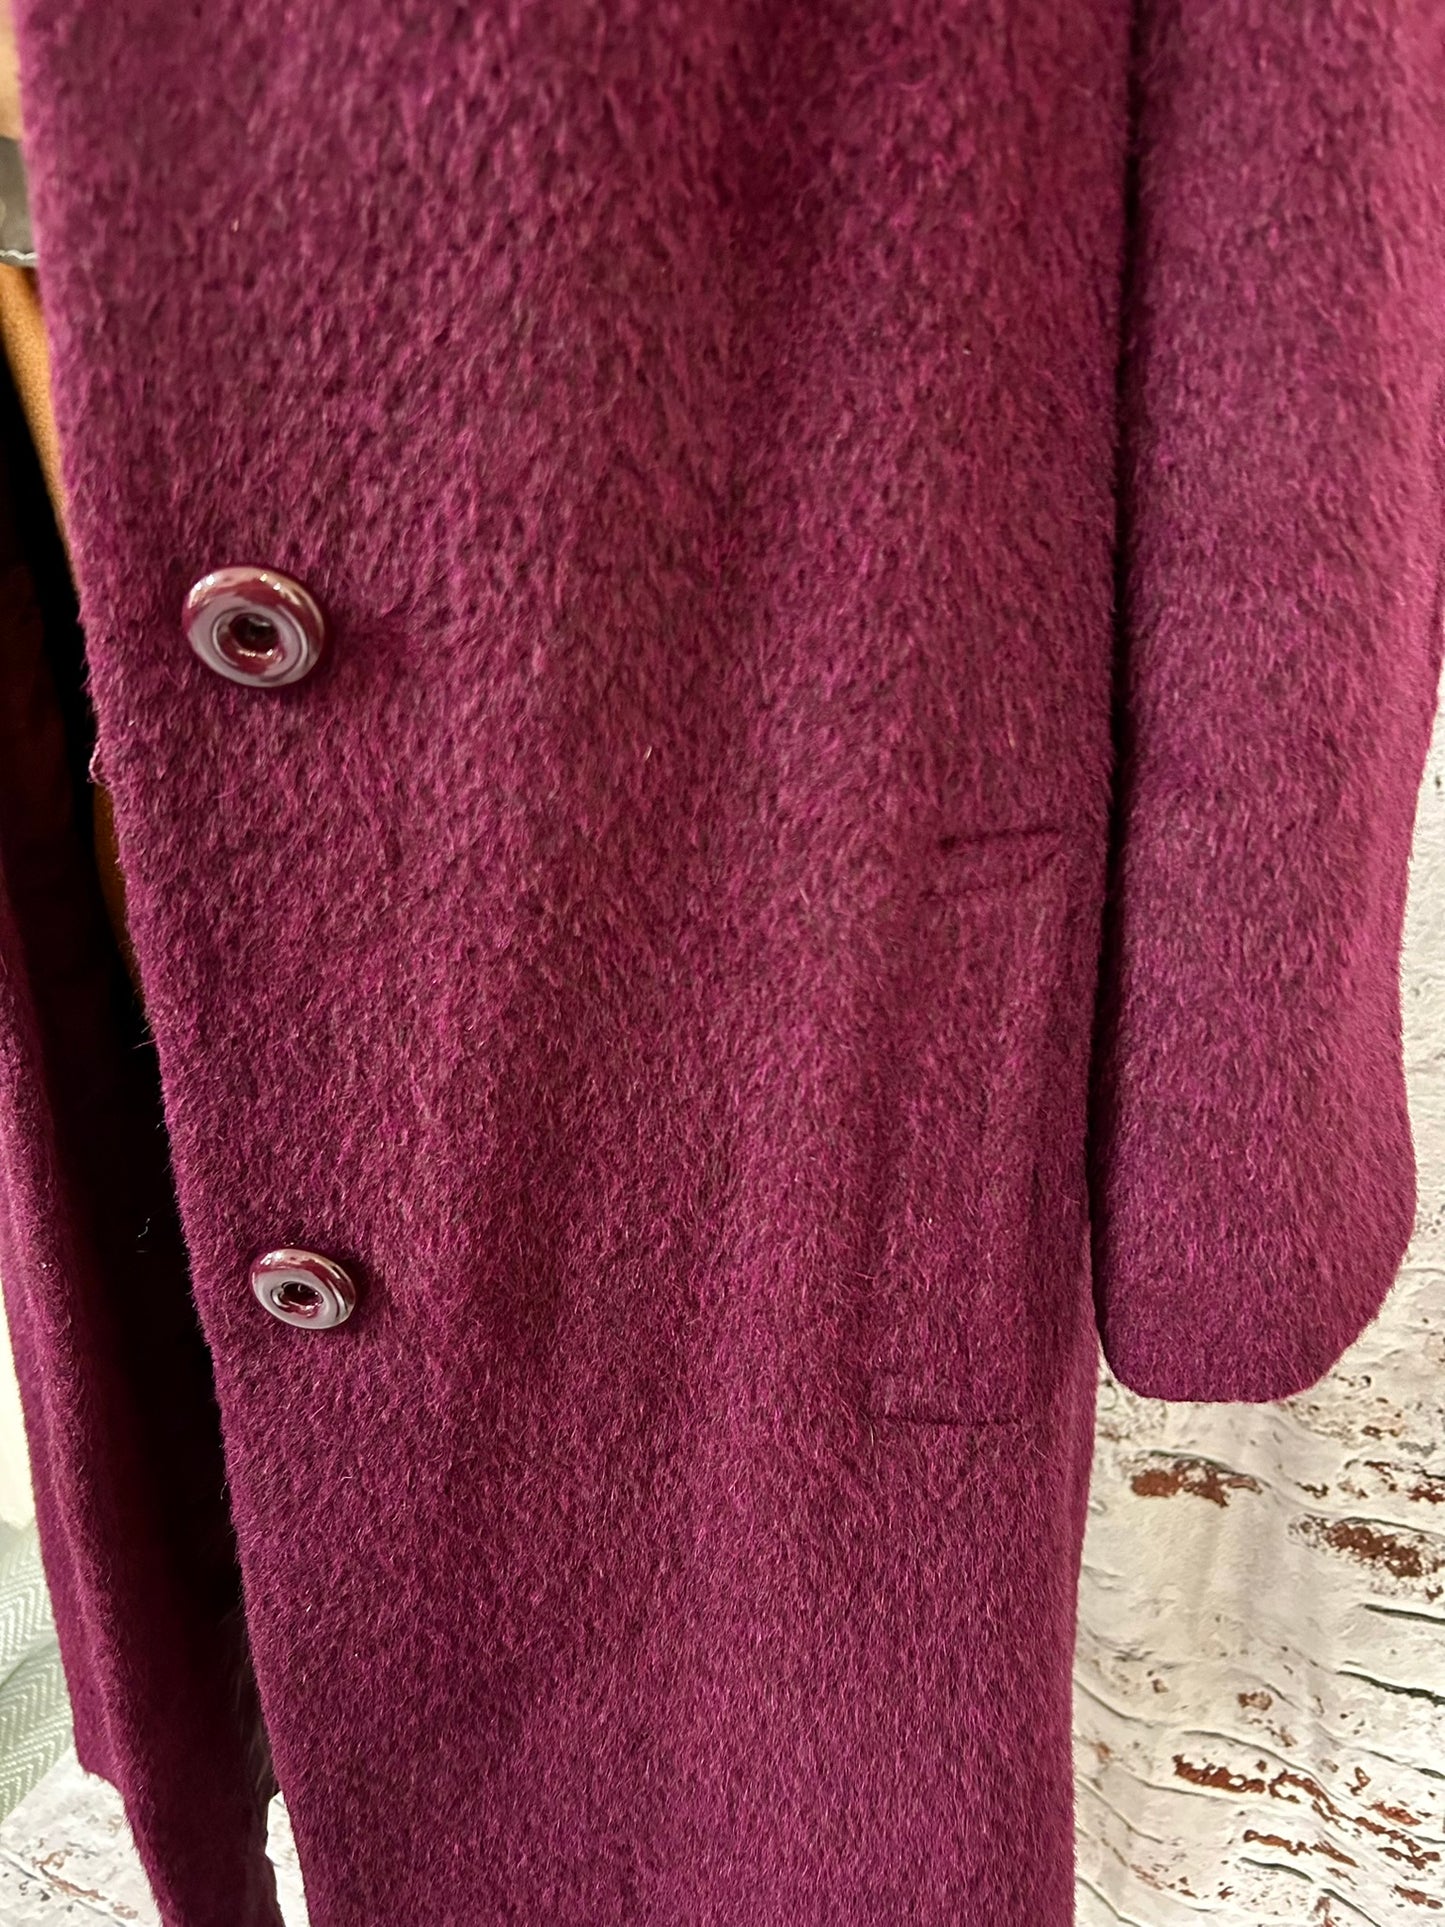 1970s Style Purple Llama Wool Coat Size 12-14